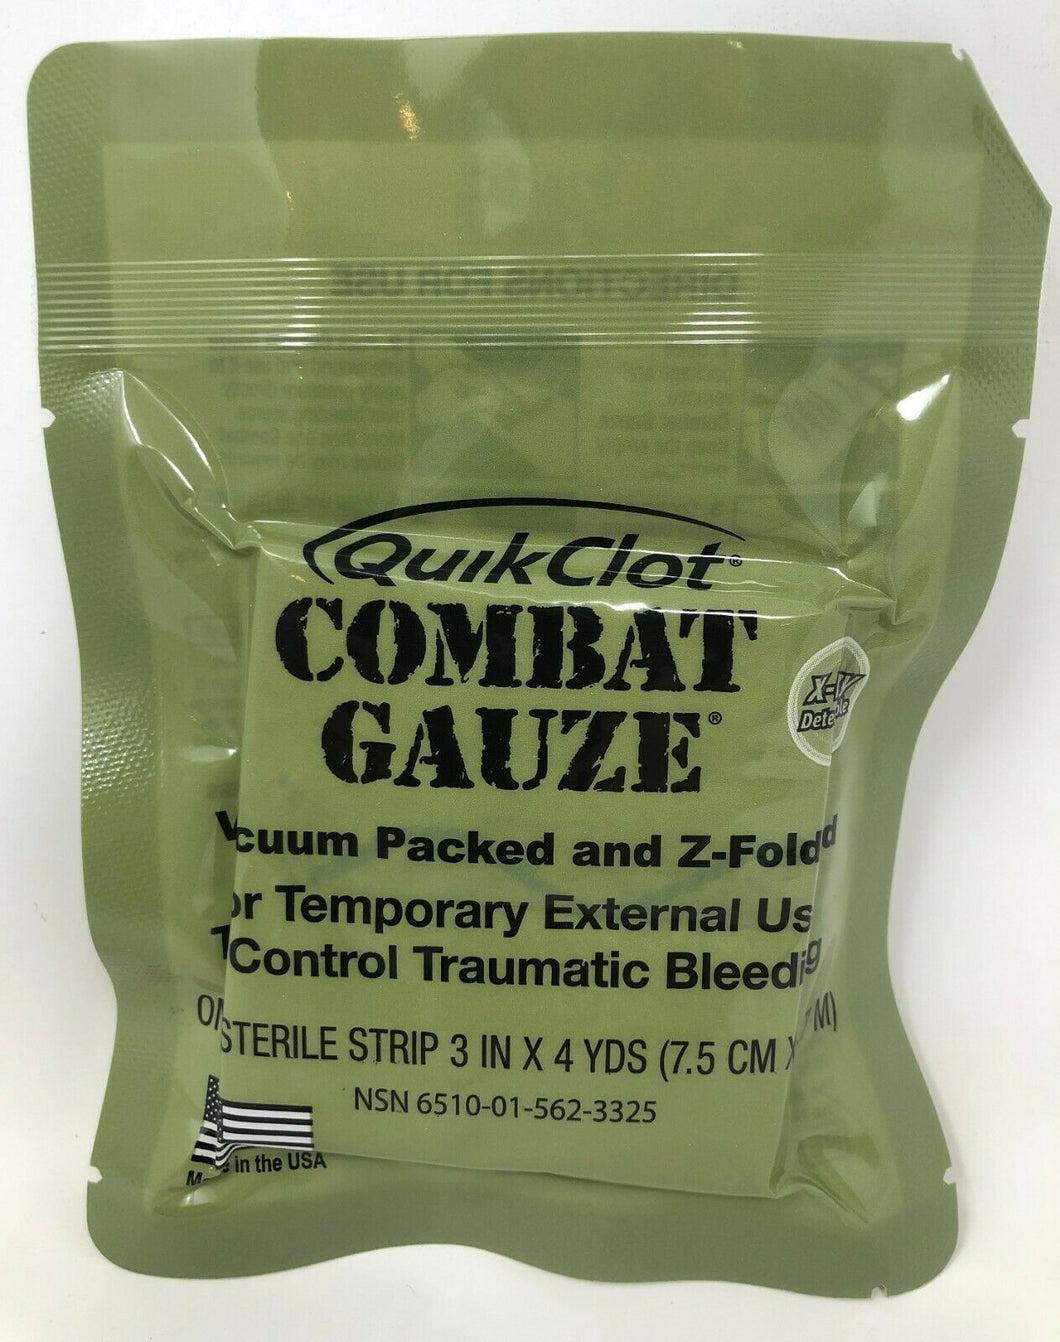 Quikclot Combat Gauze For Sale Ifak Quik Clot Gauze Price Buy Us Military Combat Gauzes Online Army Hydrophilic Gauze Ma Deuce Trading Post